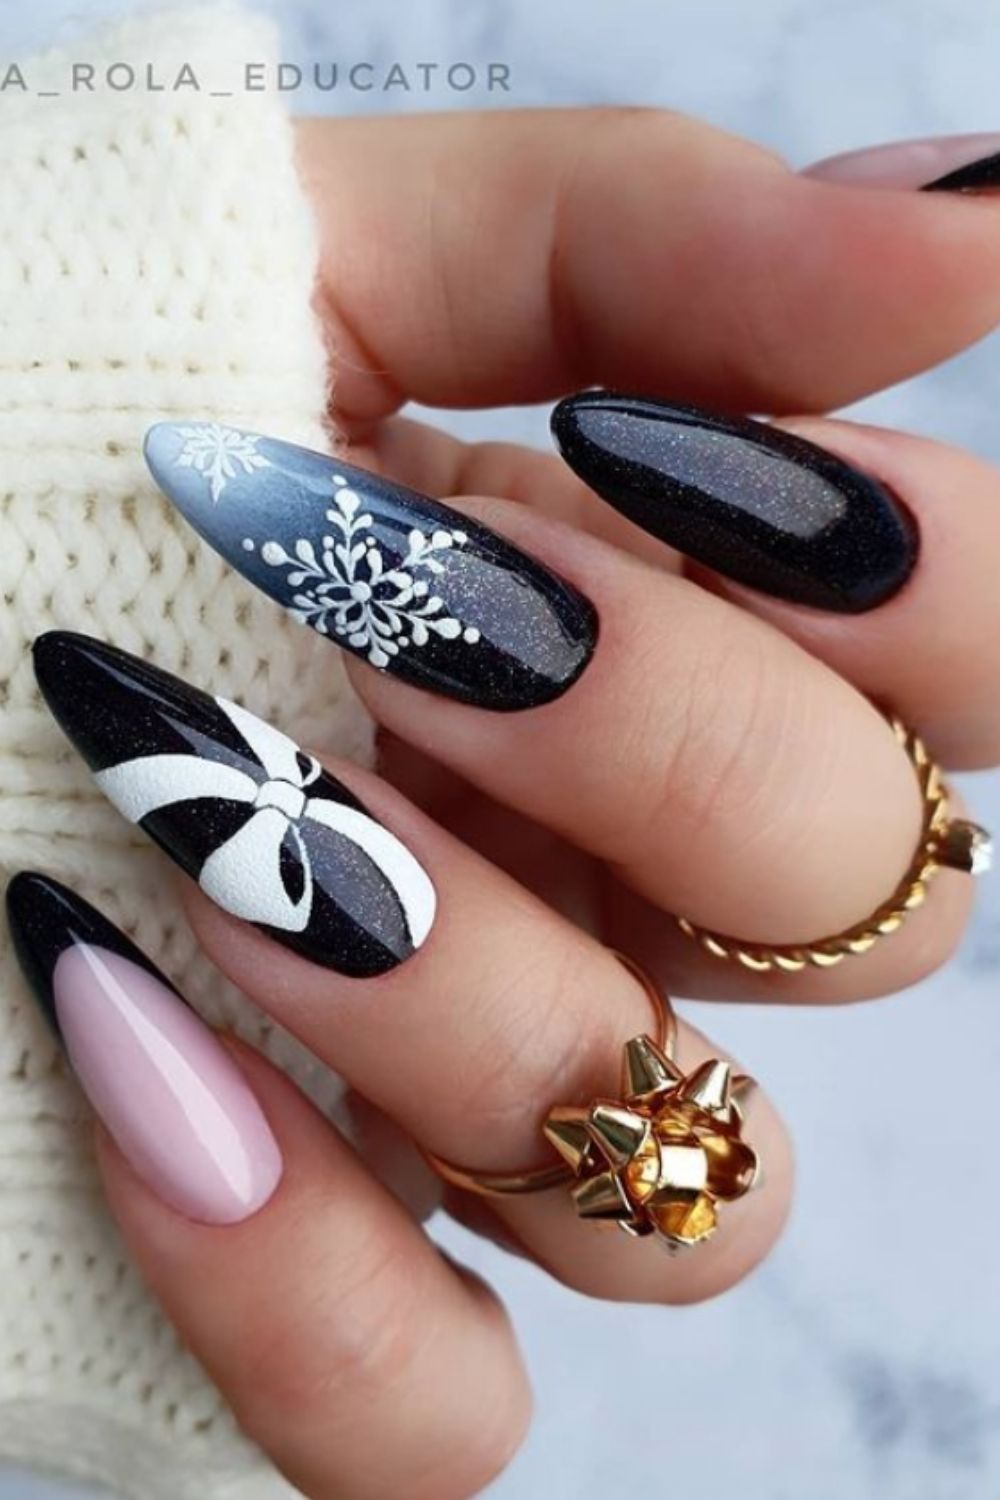 Black and snowflake almond nails art